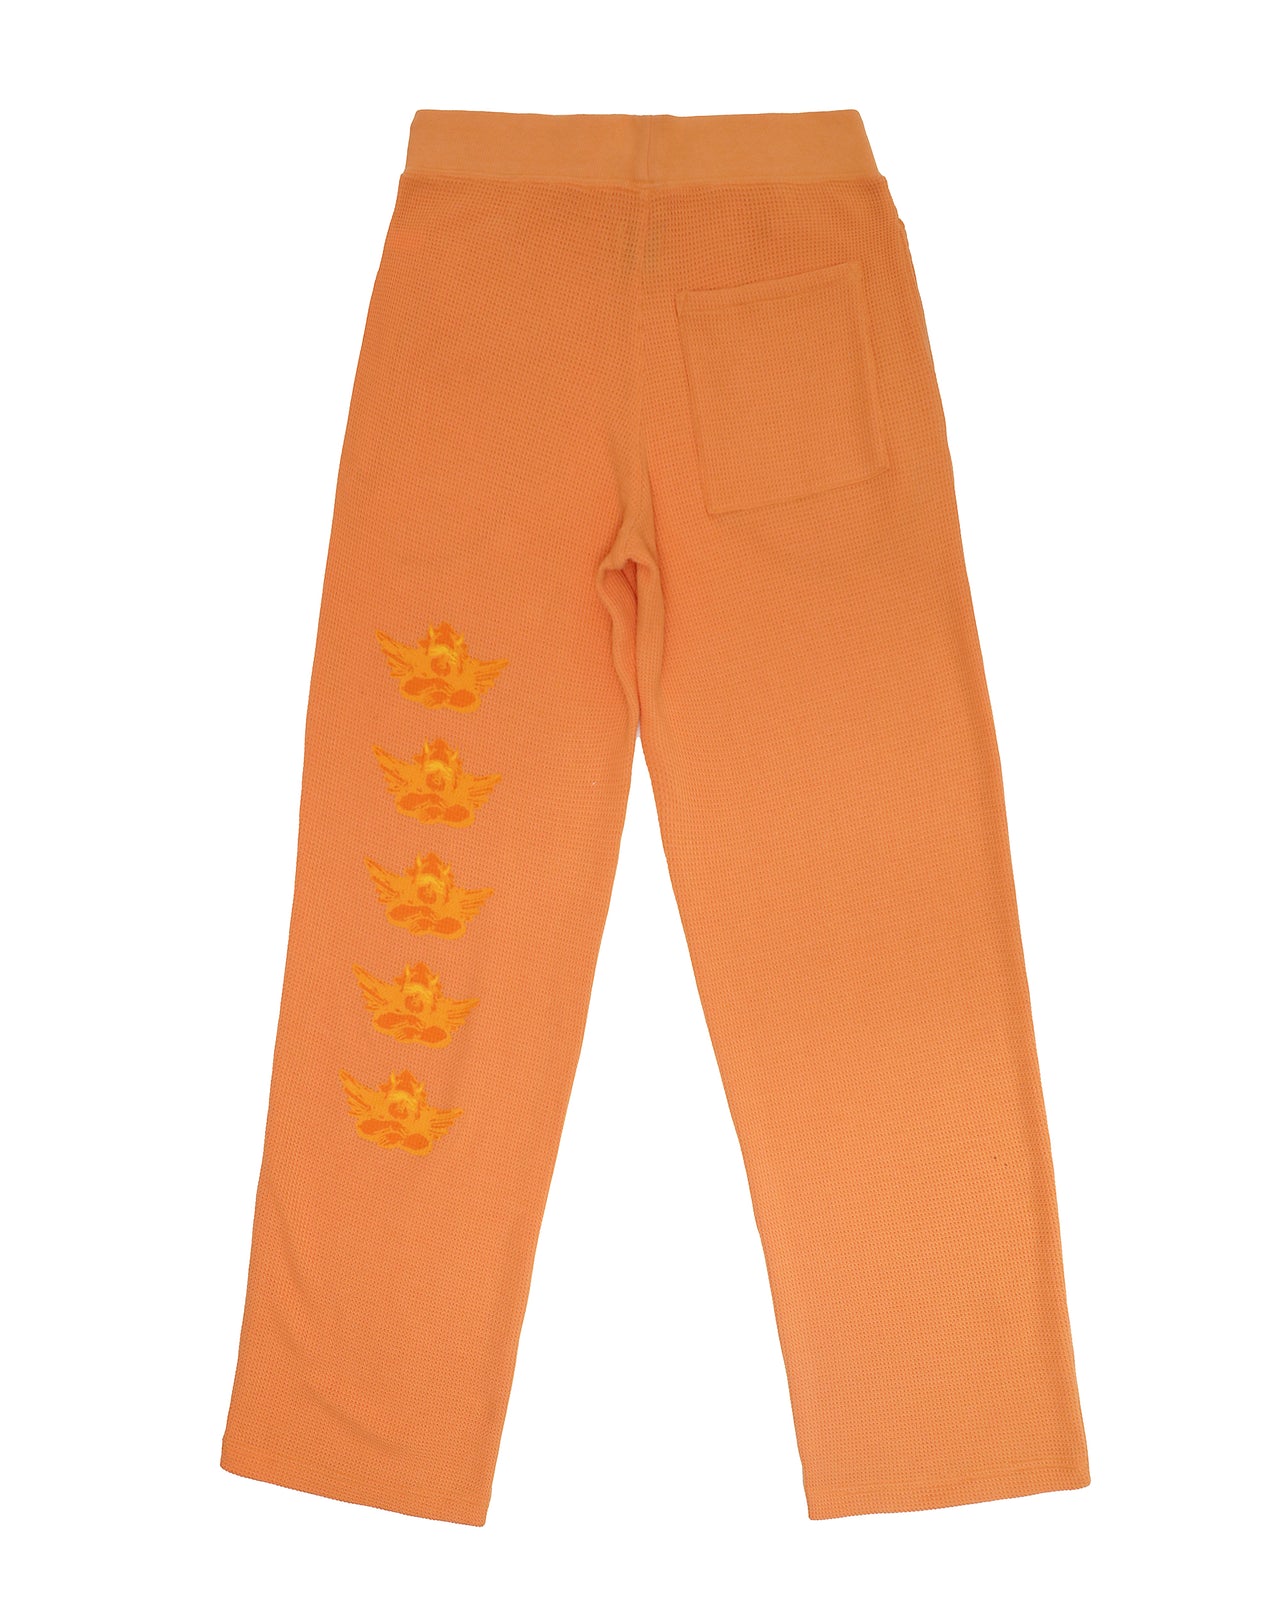 Where it Begins Thermal Pants Orange, Sweatpant Bottom by Boys Lie | LIT Boutique